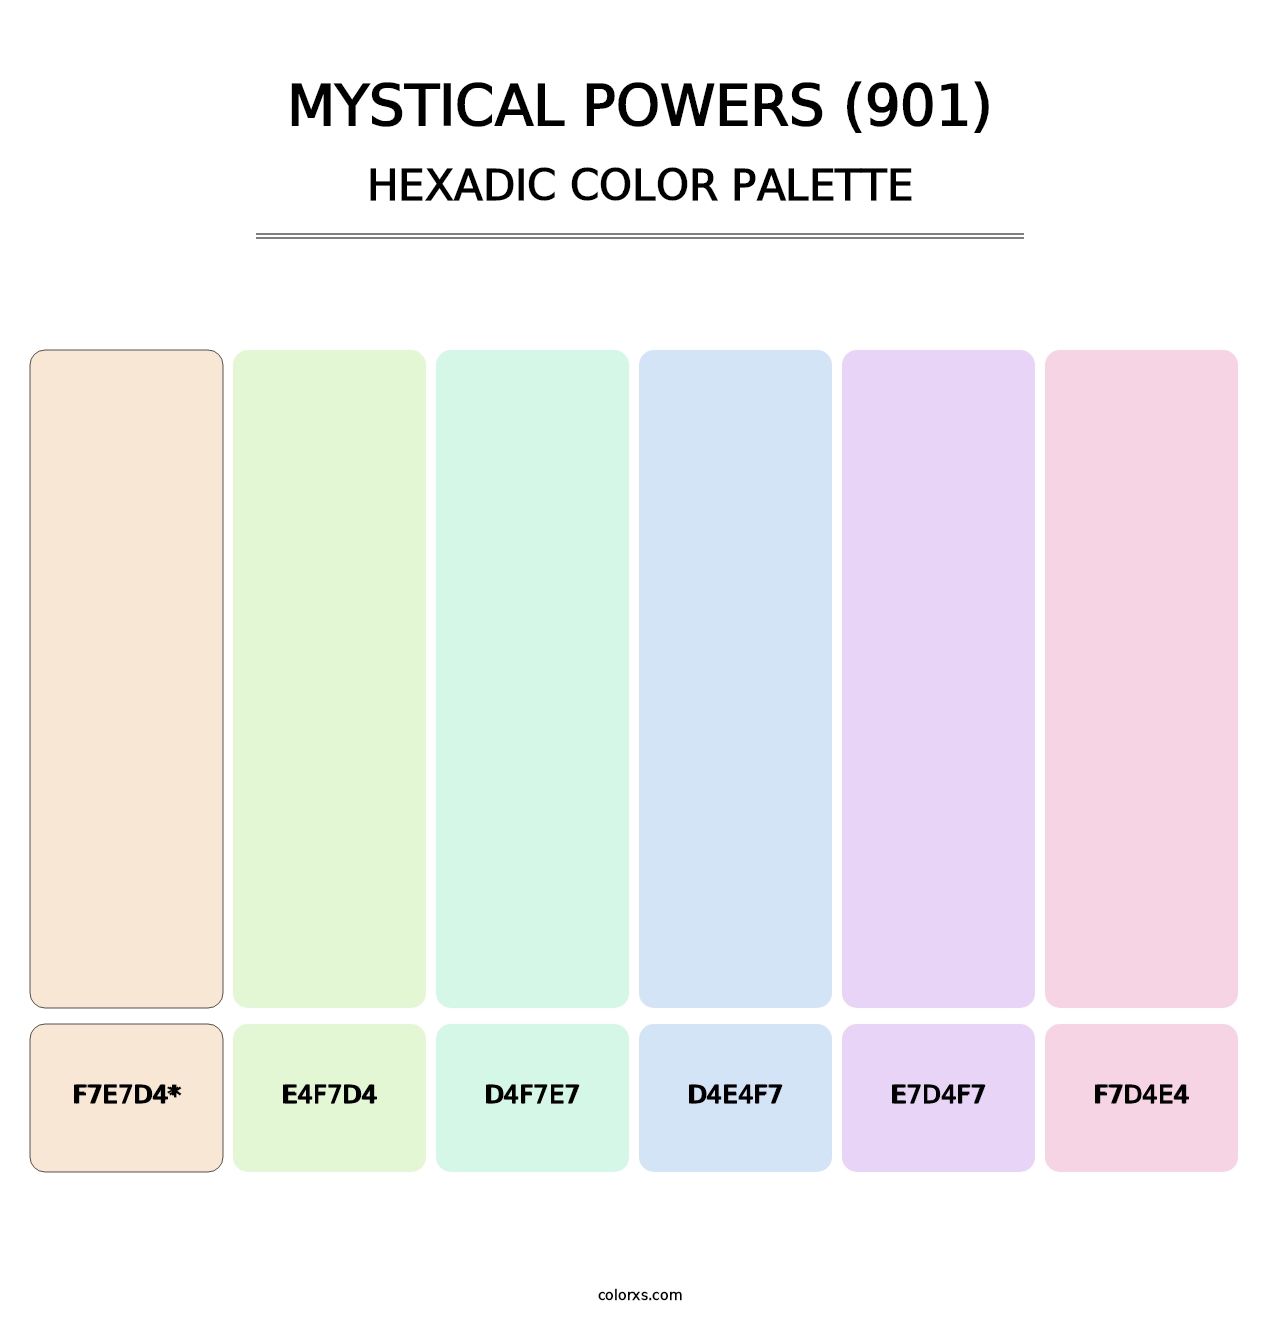 Mystical Powers (901) - Hexadic Color Palette